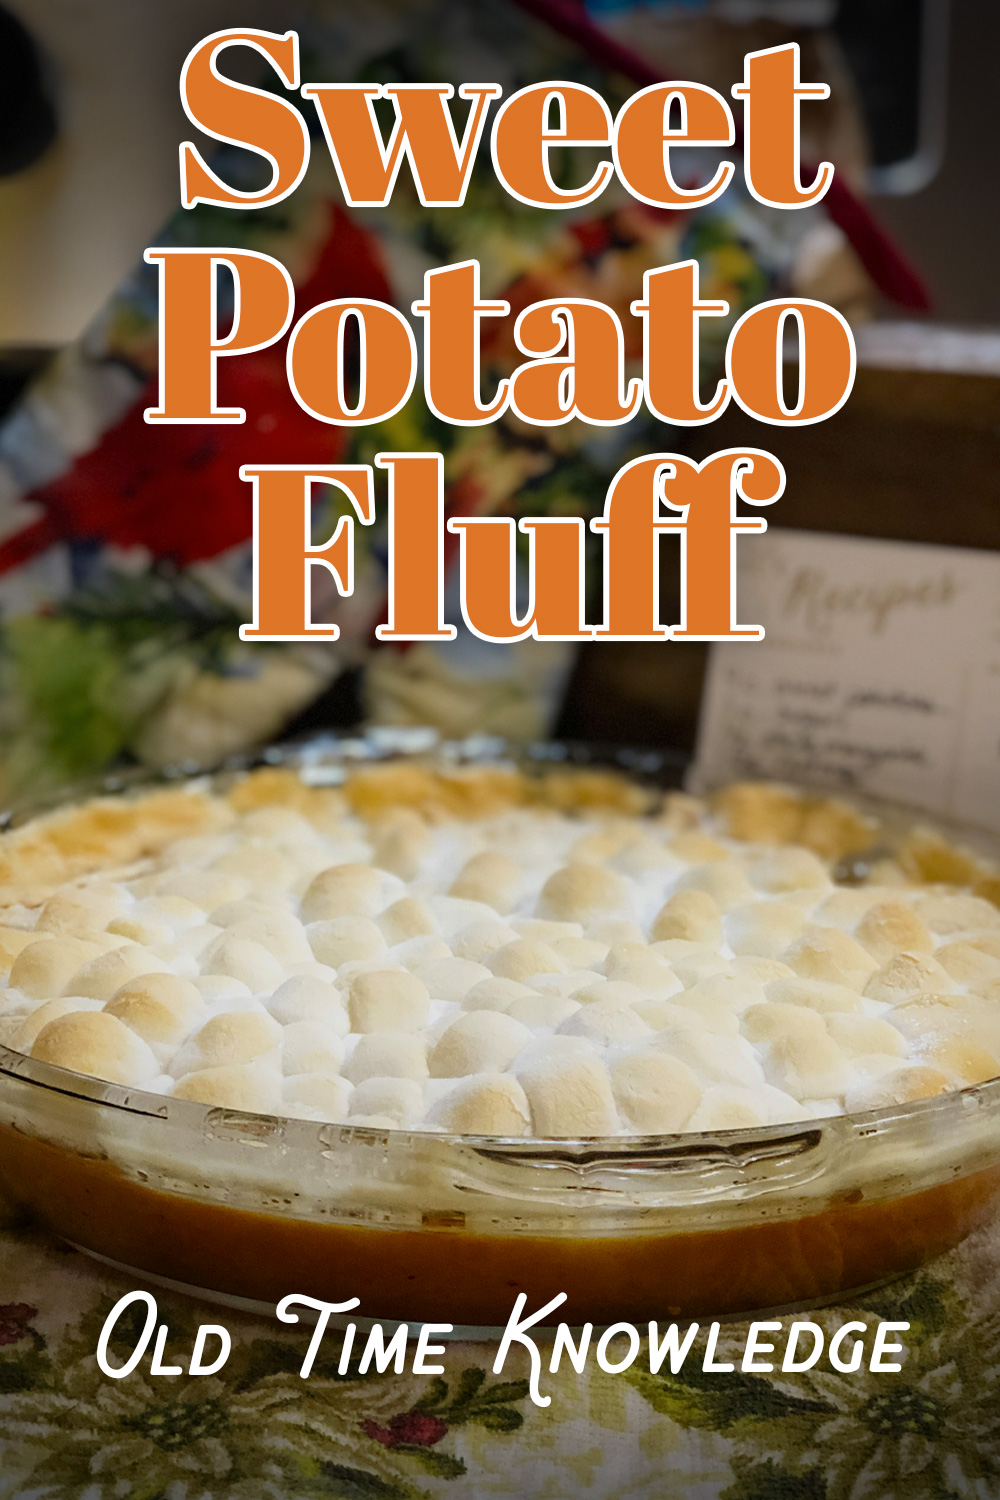 How to Make Sweet Potato Fluff (My grandmother’s recipe!)